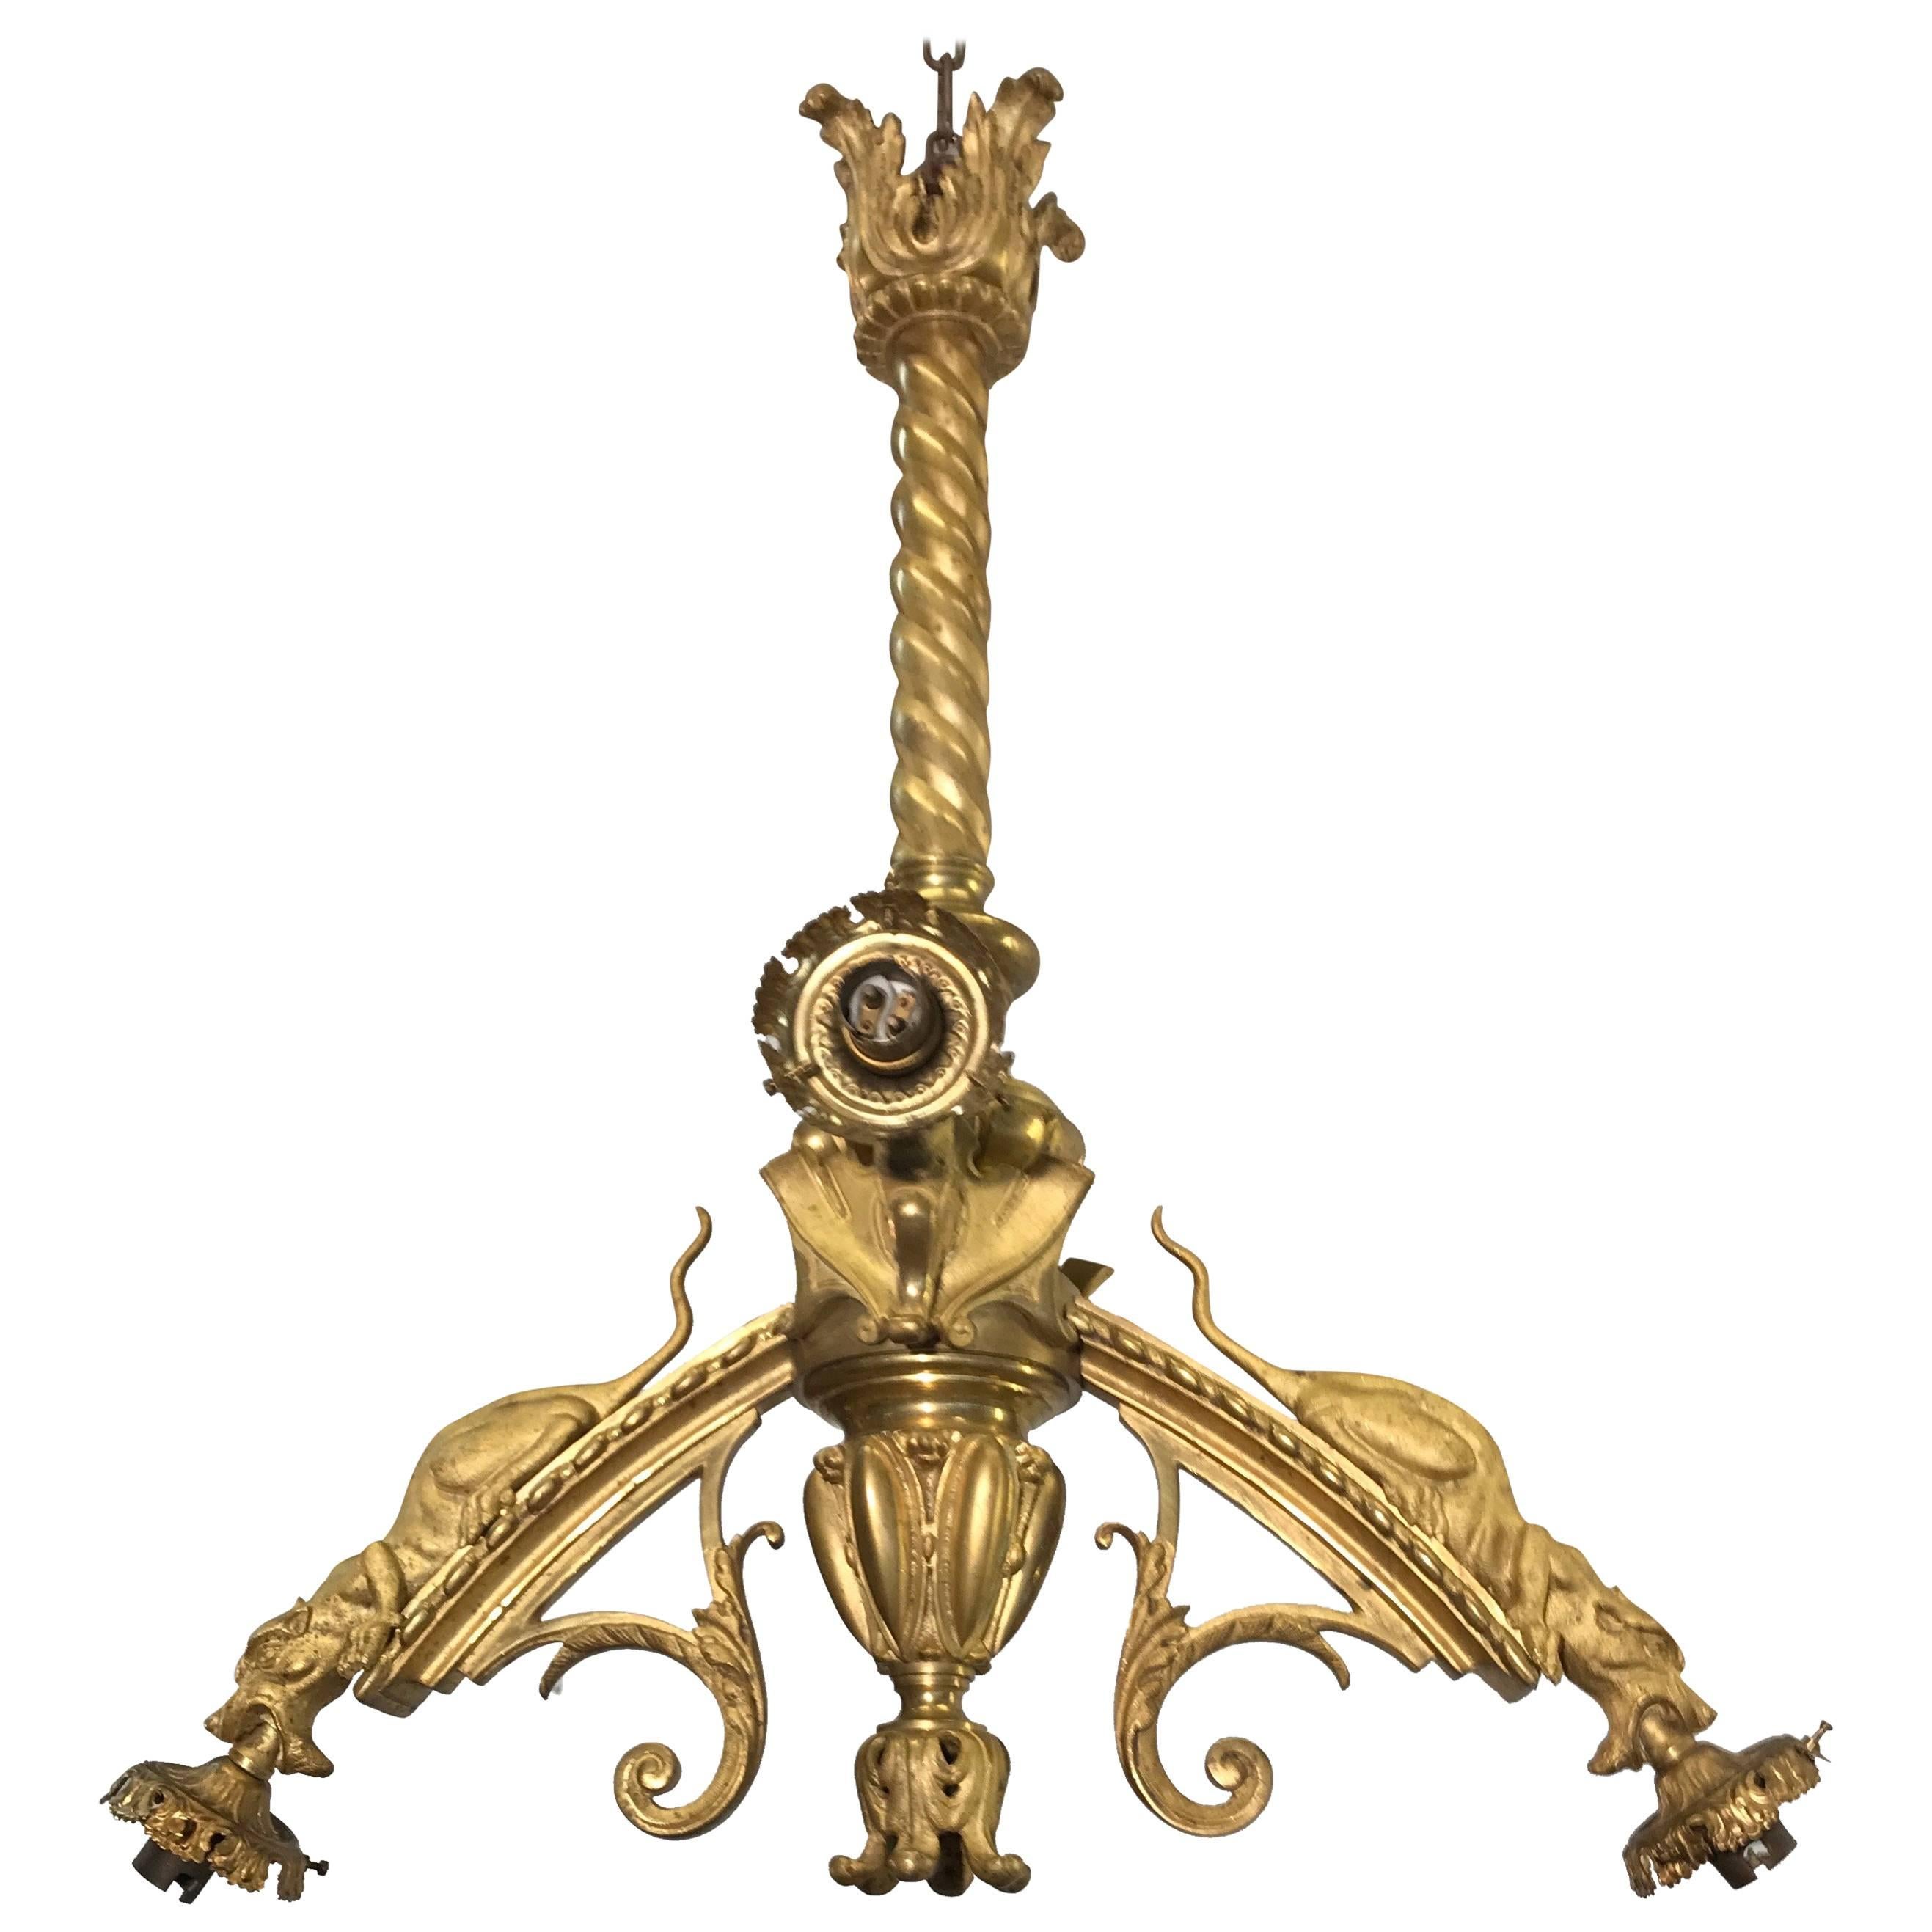 Antique Gothic Revival Fire Gilt Bronze Chandelier w Rare Mythological Creatures